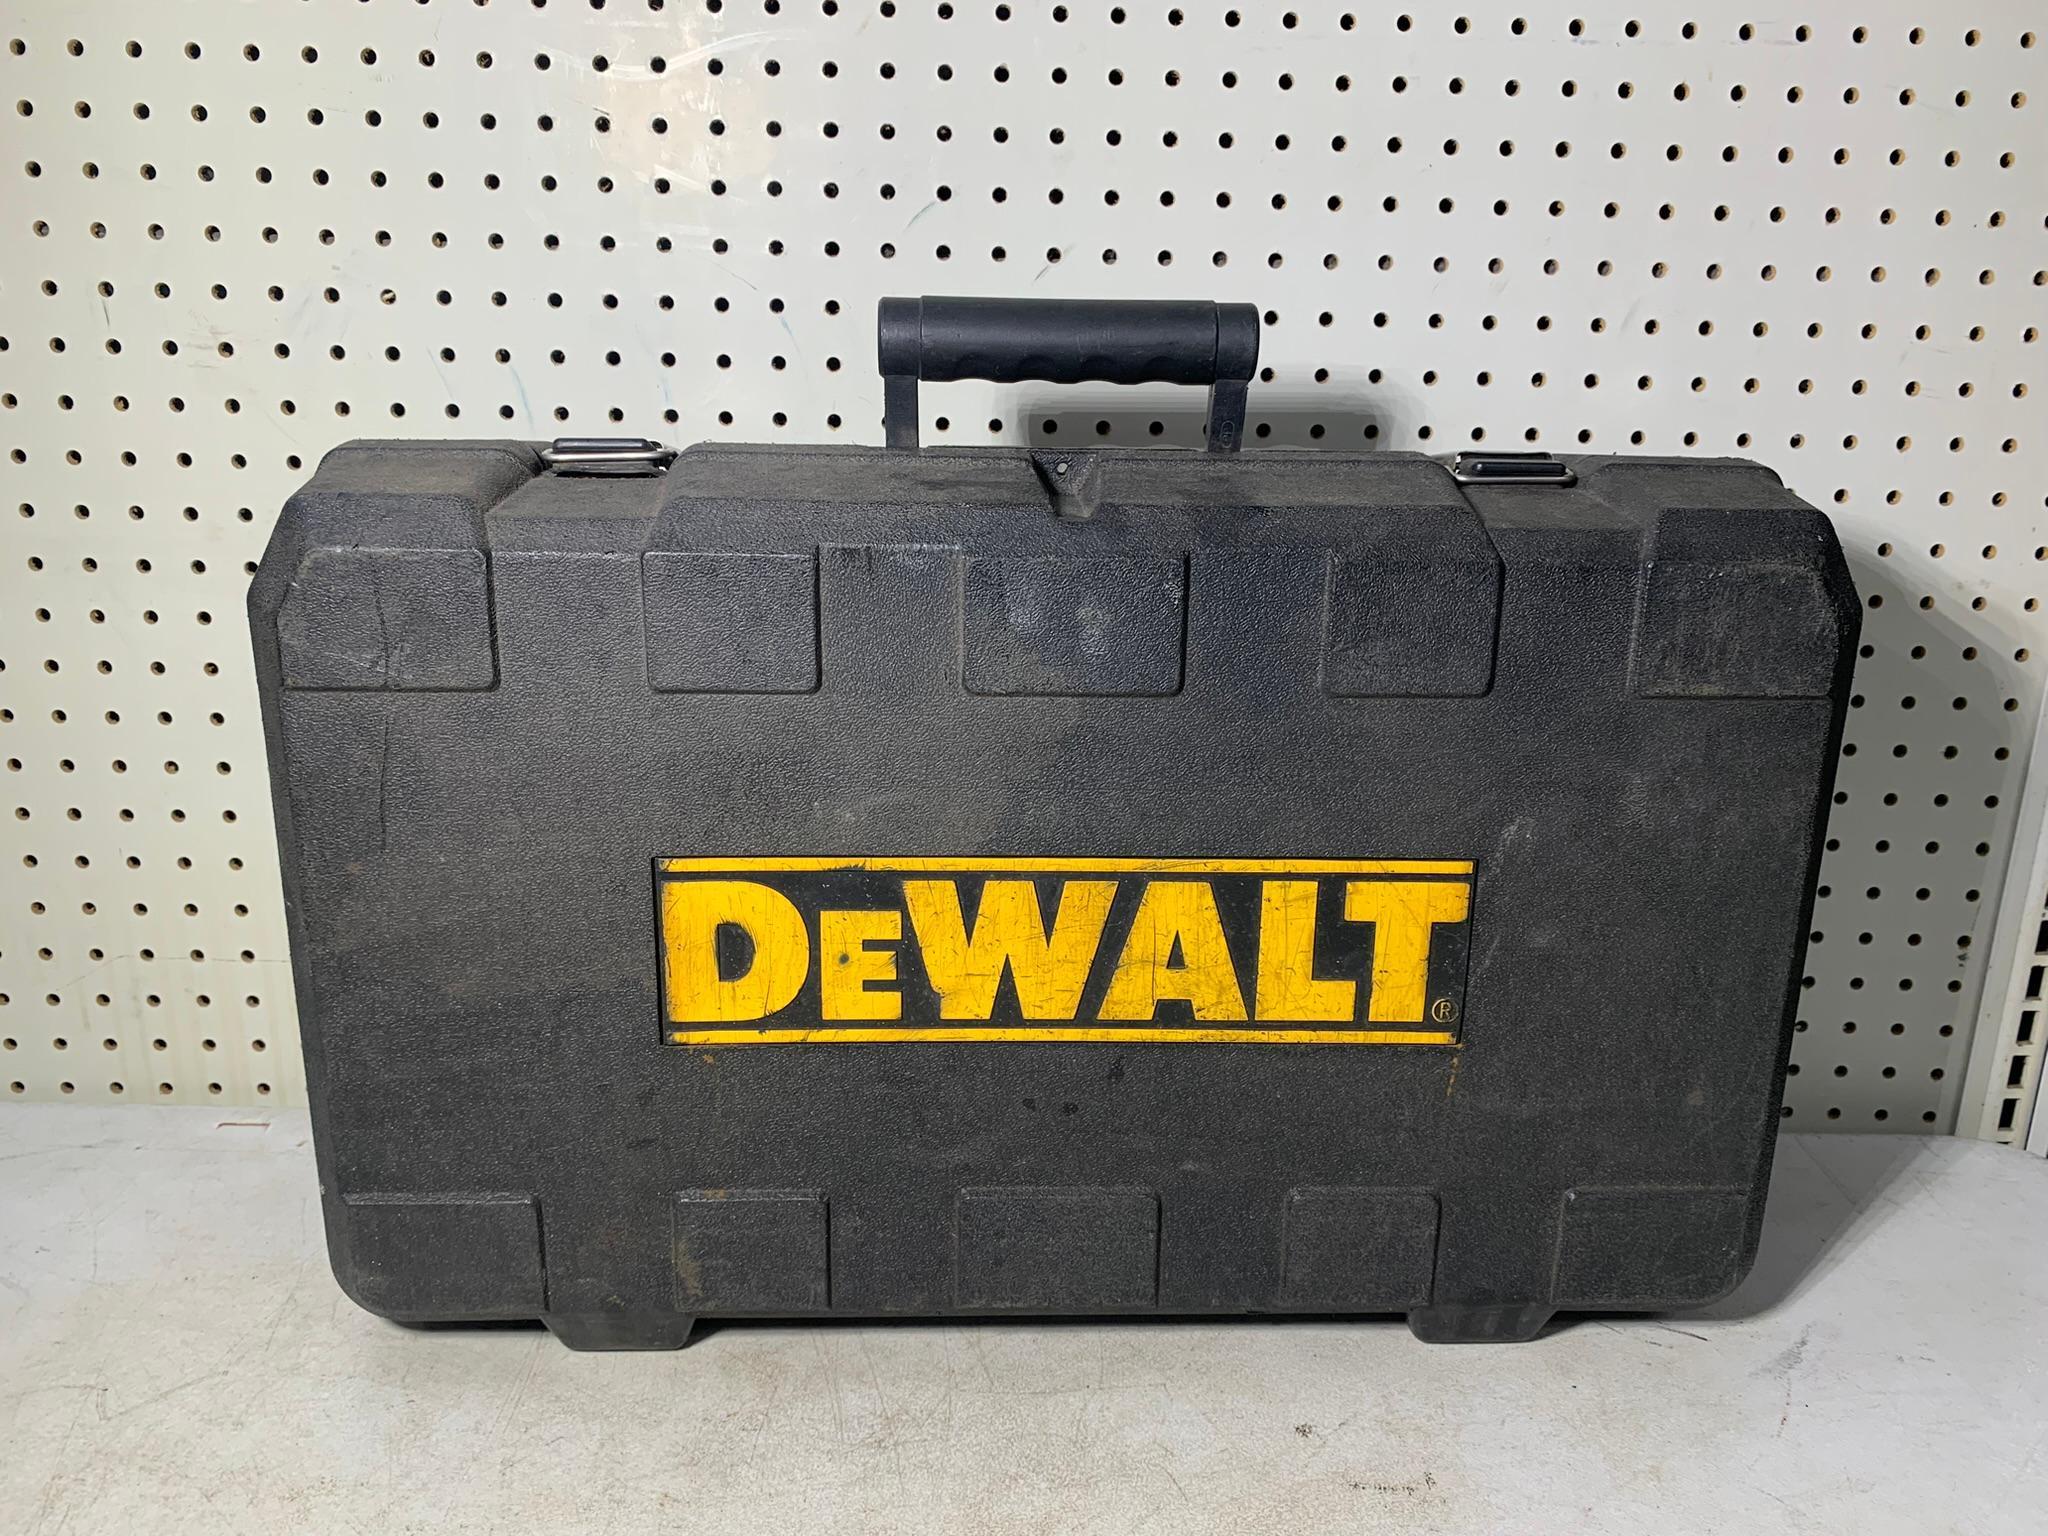 Dewalt Portable Band Saw with Case